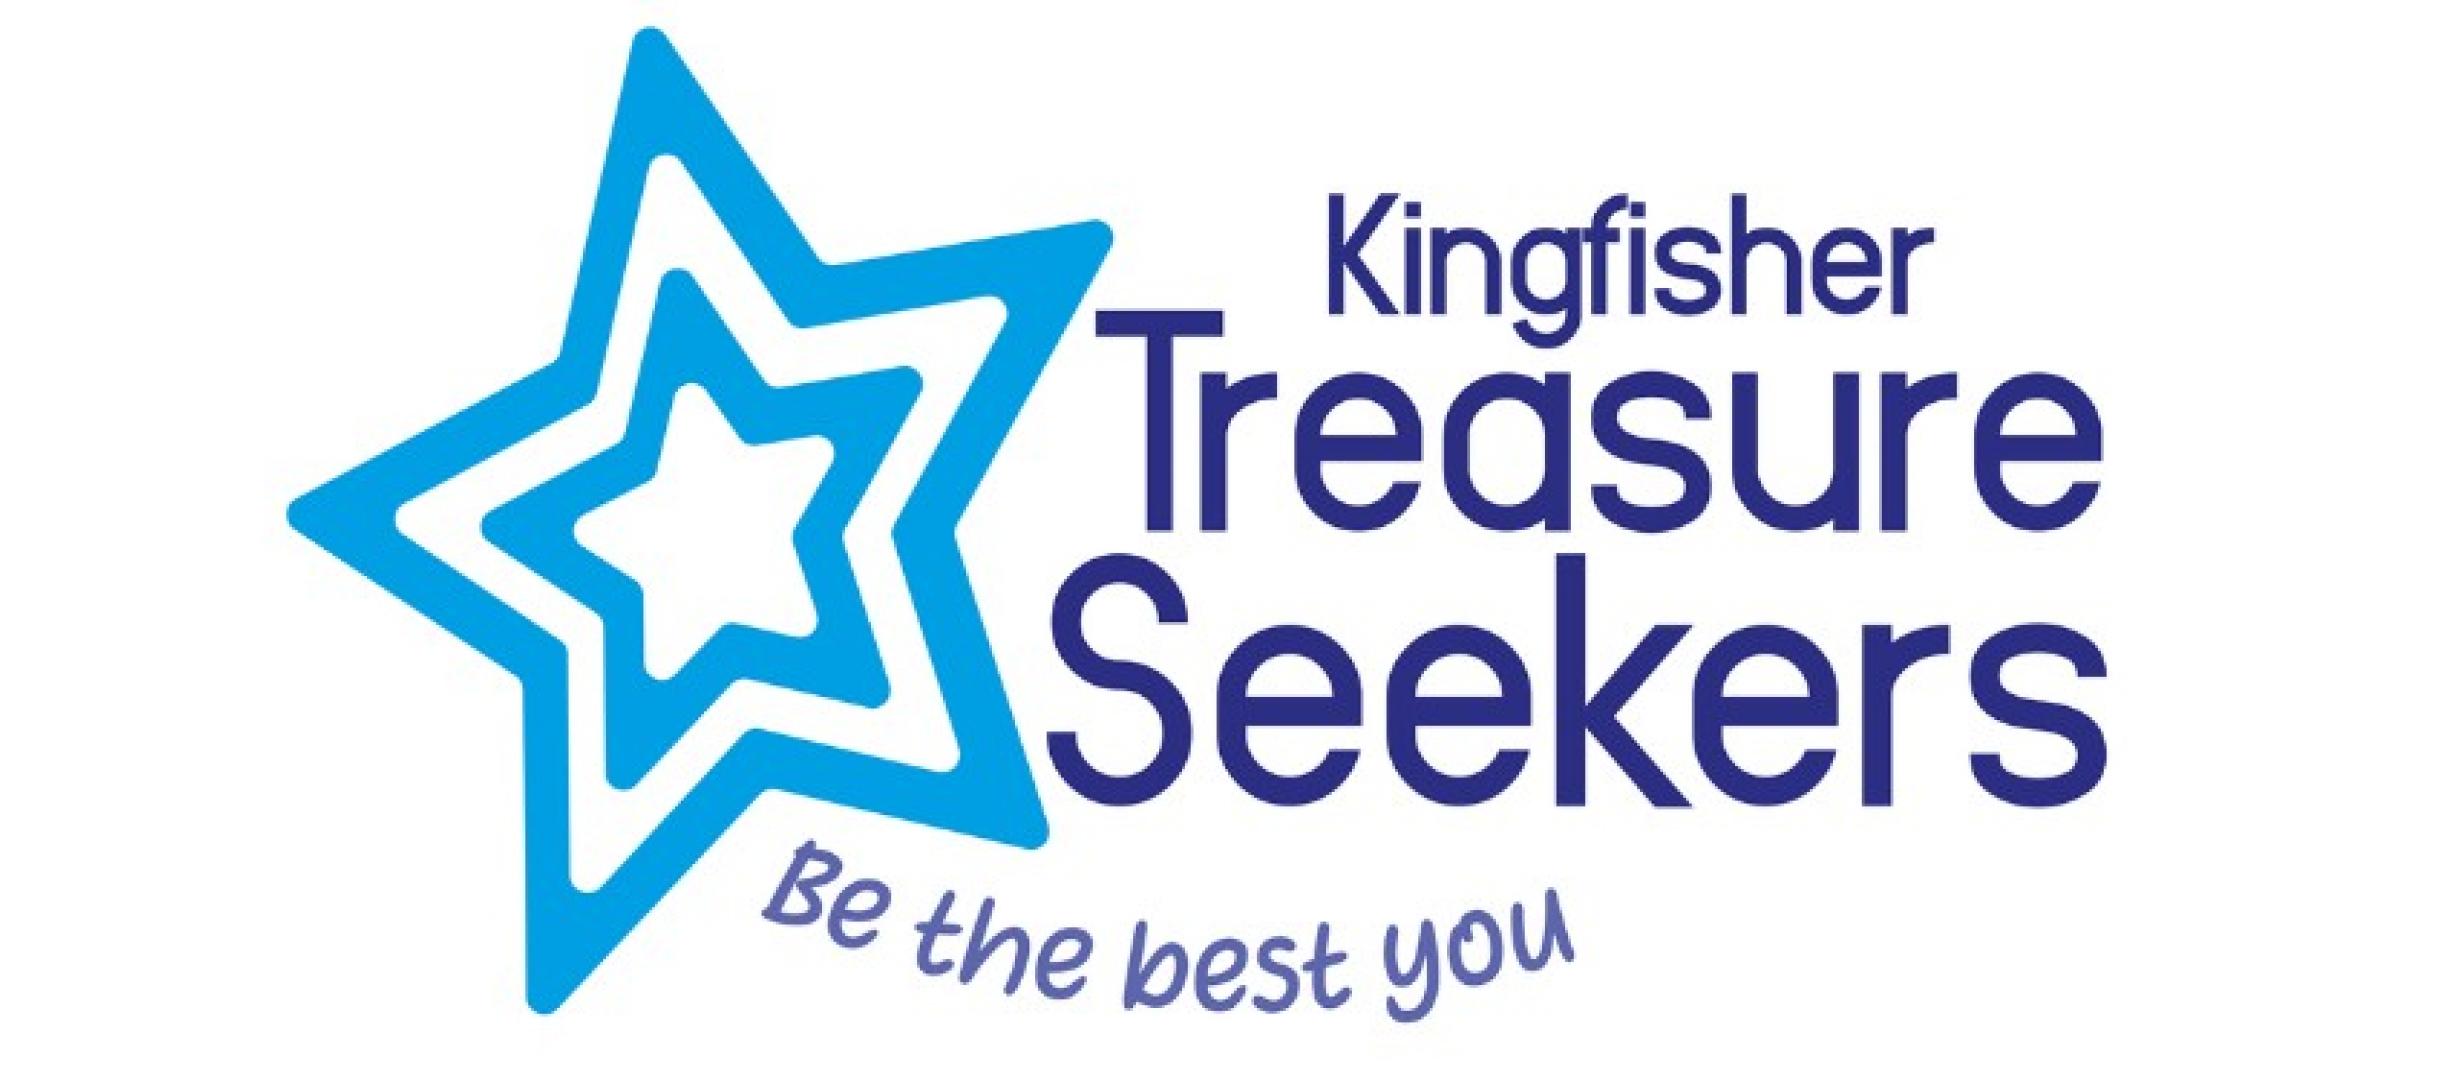 Photo for Kingfisher Treasure Seekers